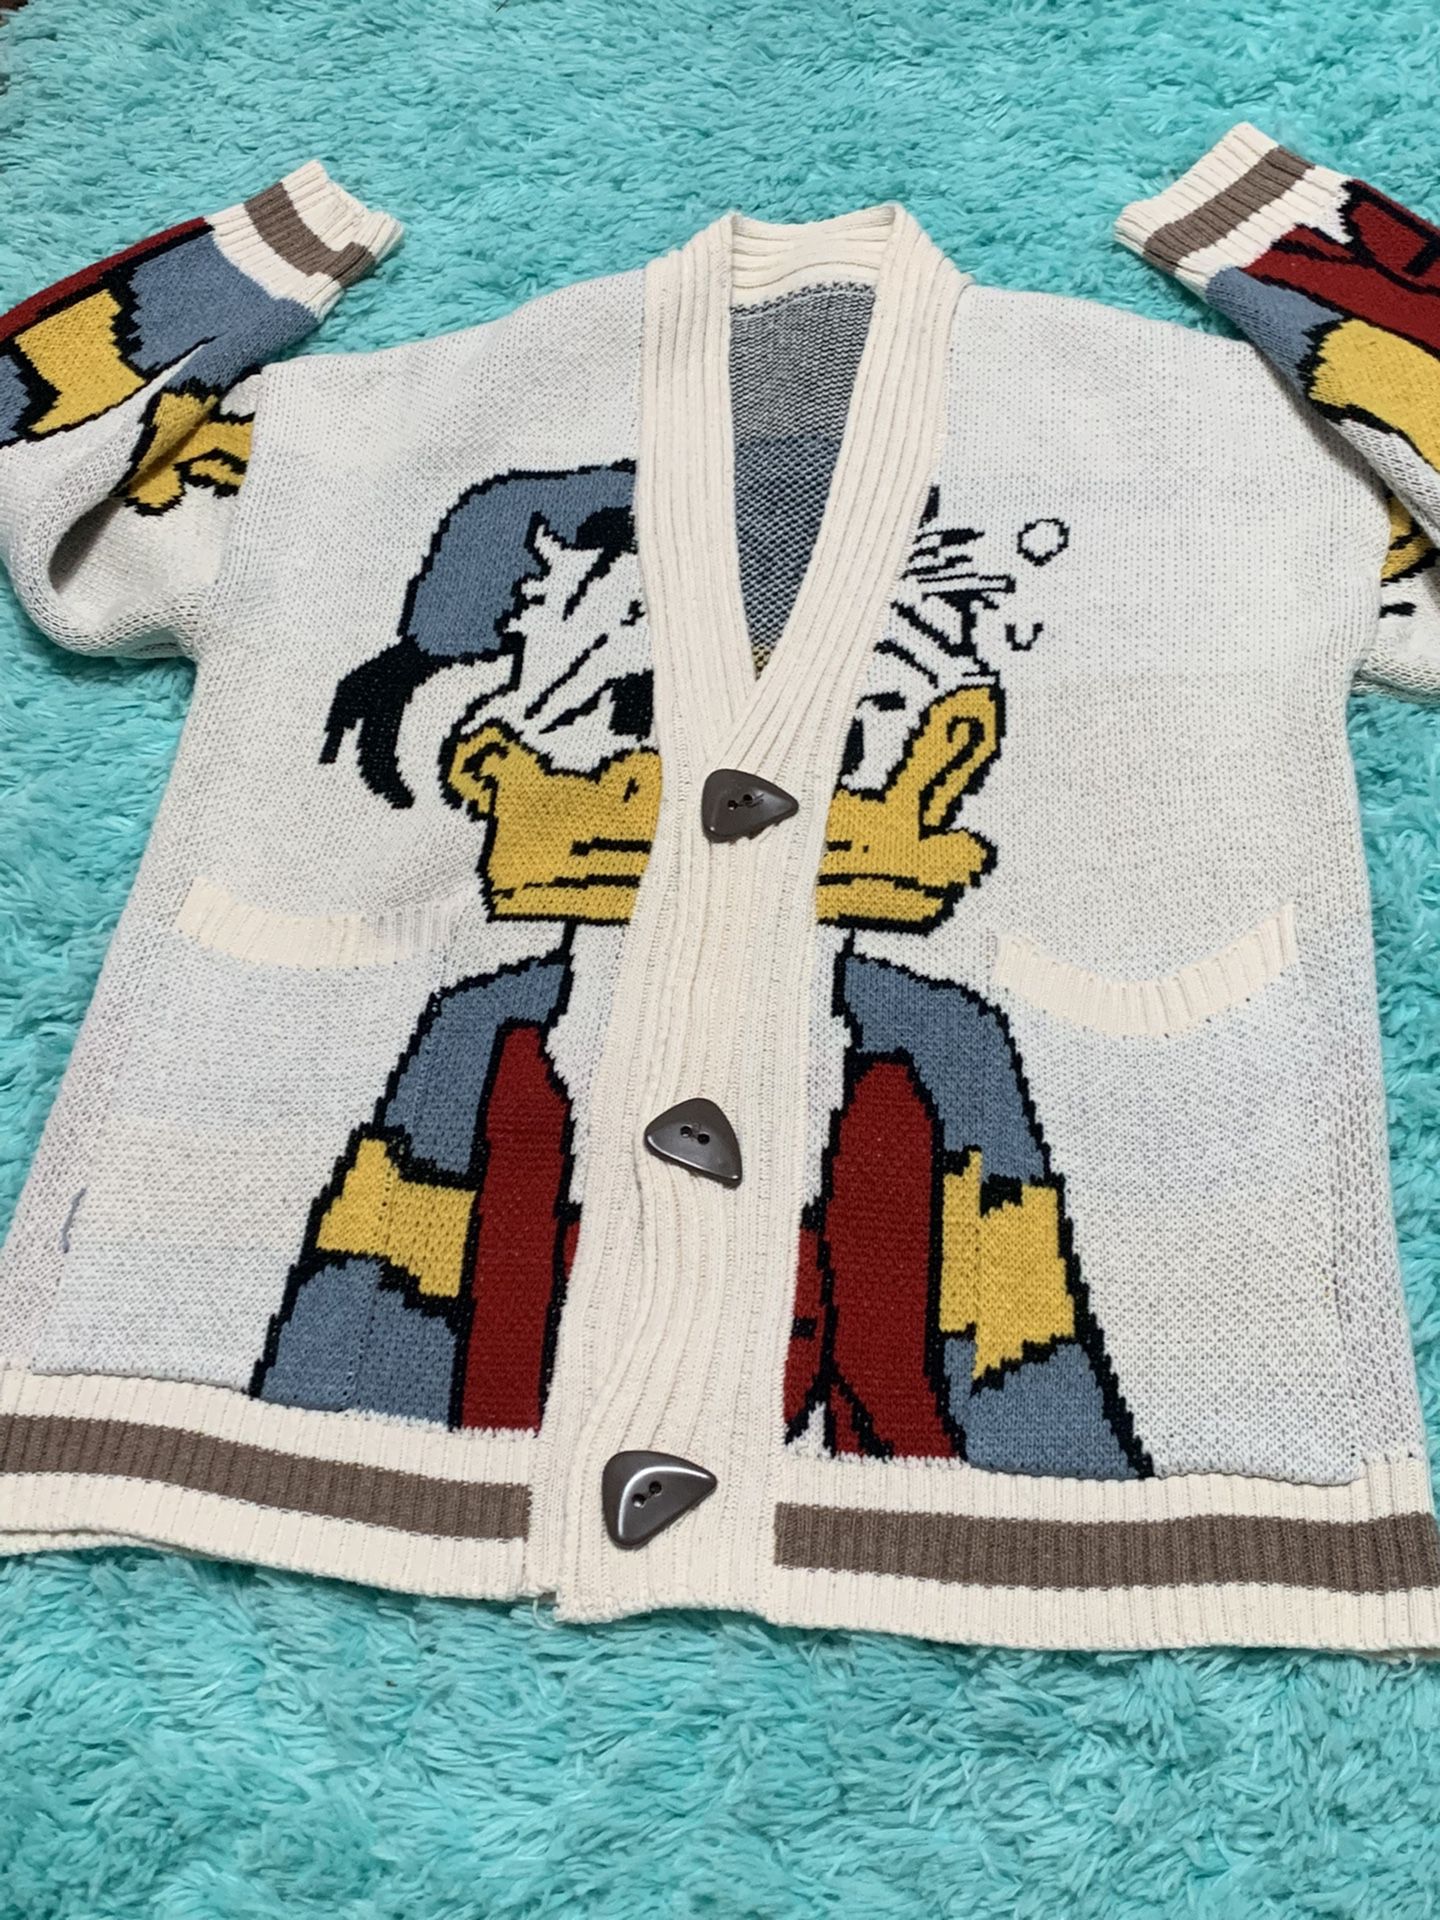 Donald Duck Vintage Knitted sweater - size Medium 🌟     #Vintagelooneytoons #looneytoons #Donaldduck #disney #vintagedisney 